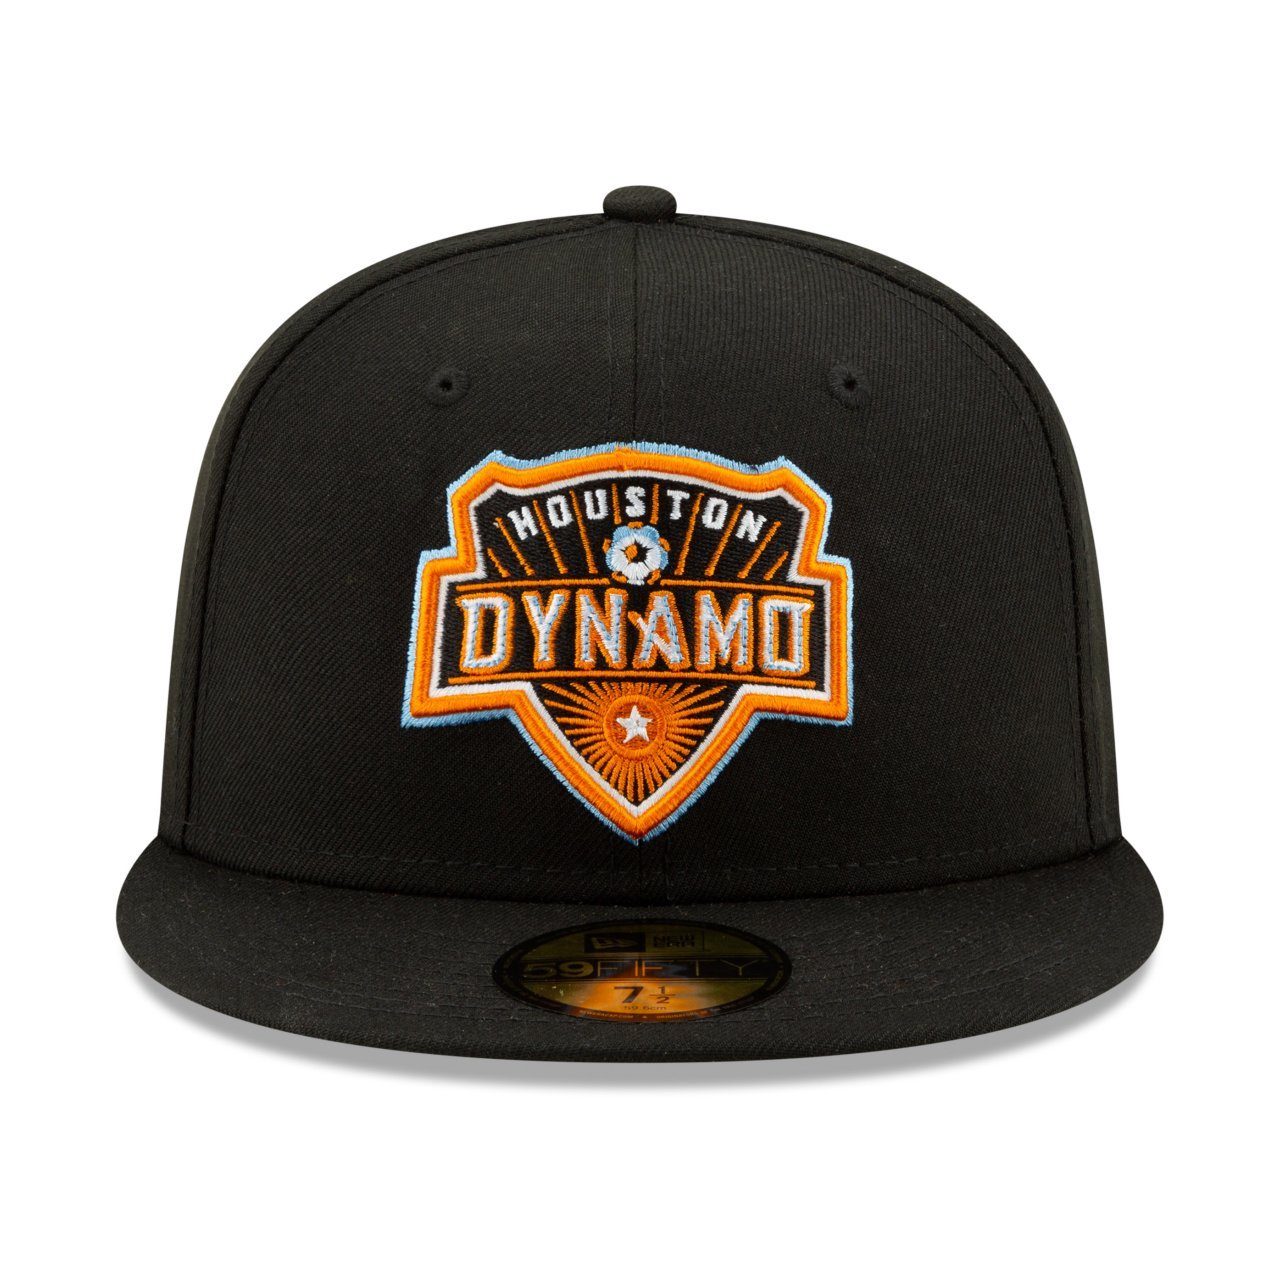 MLS Dynamo Houston Fitted 59Fifty Cap New Era